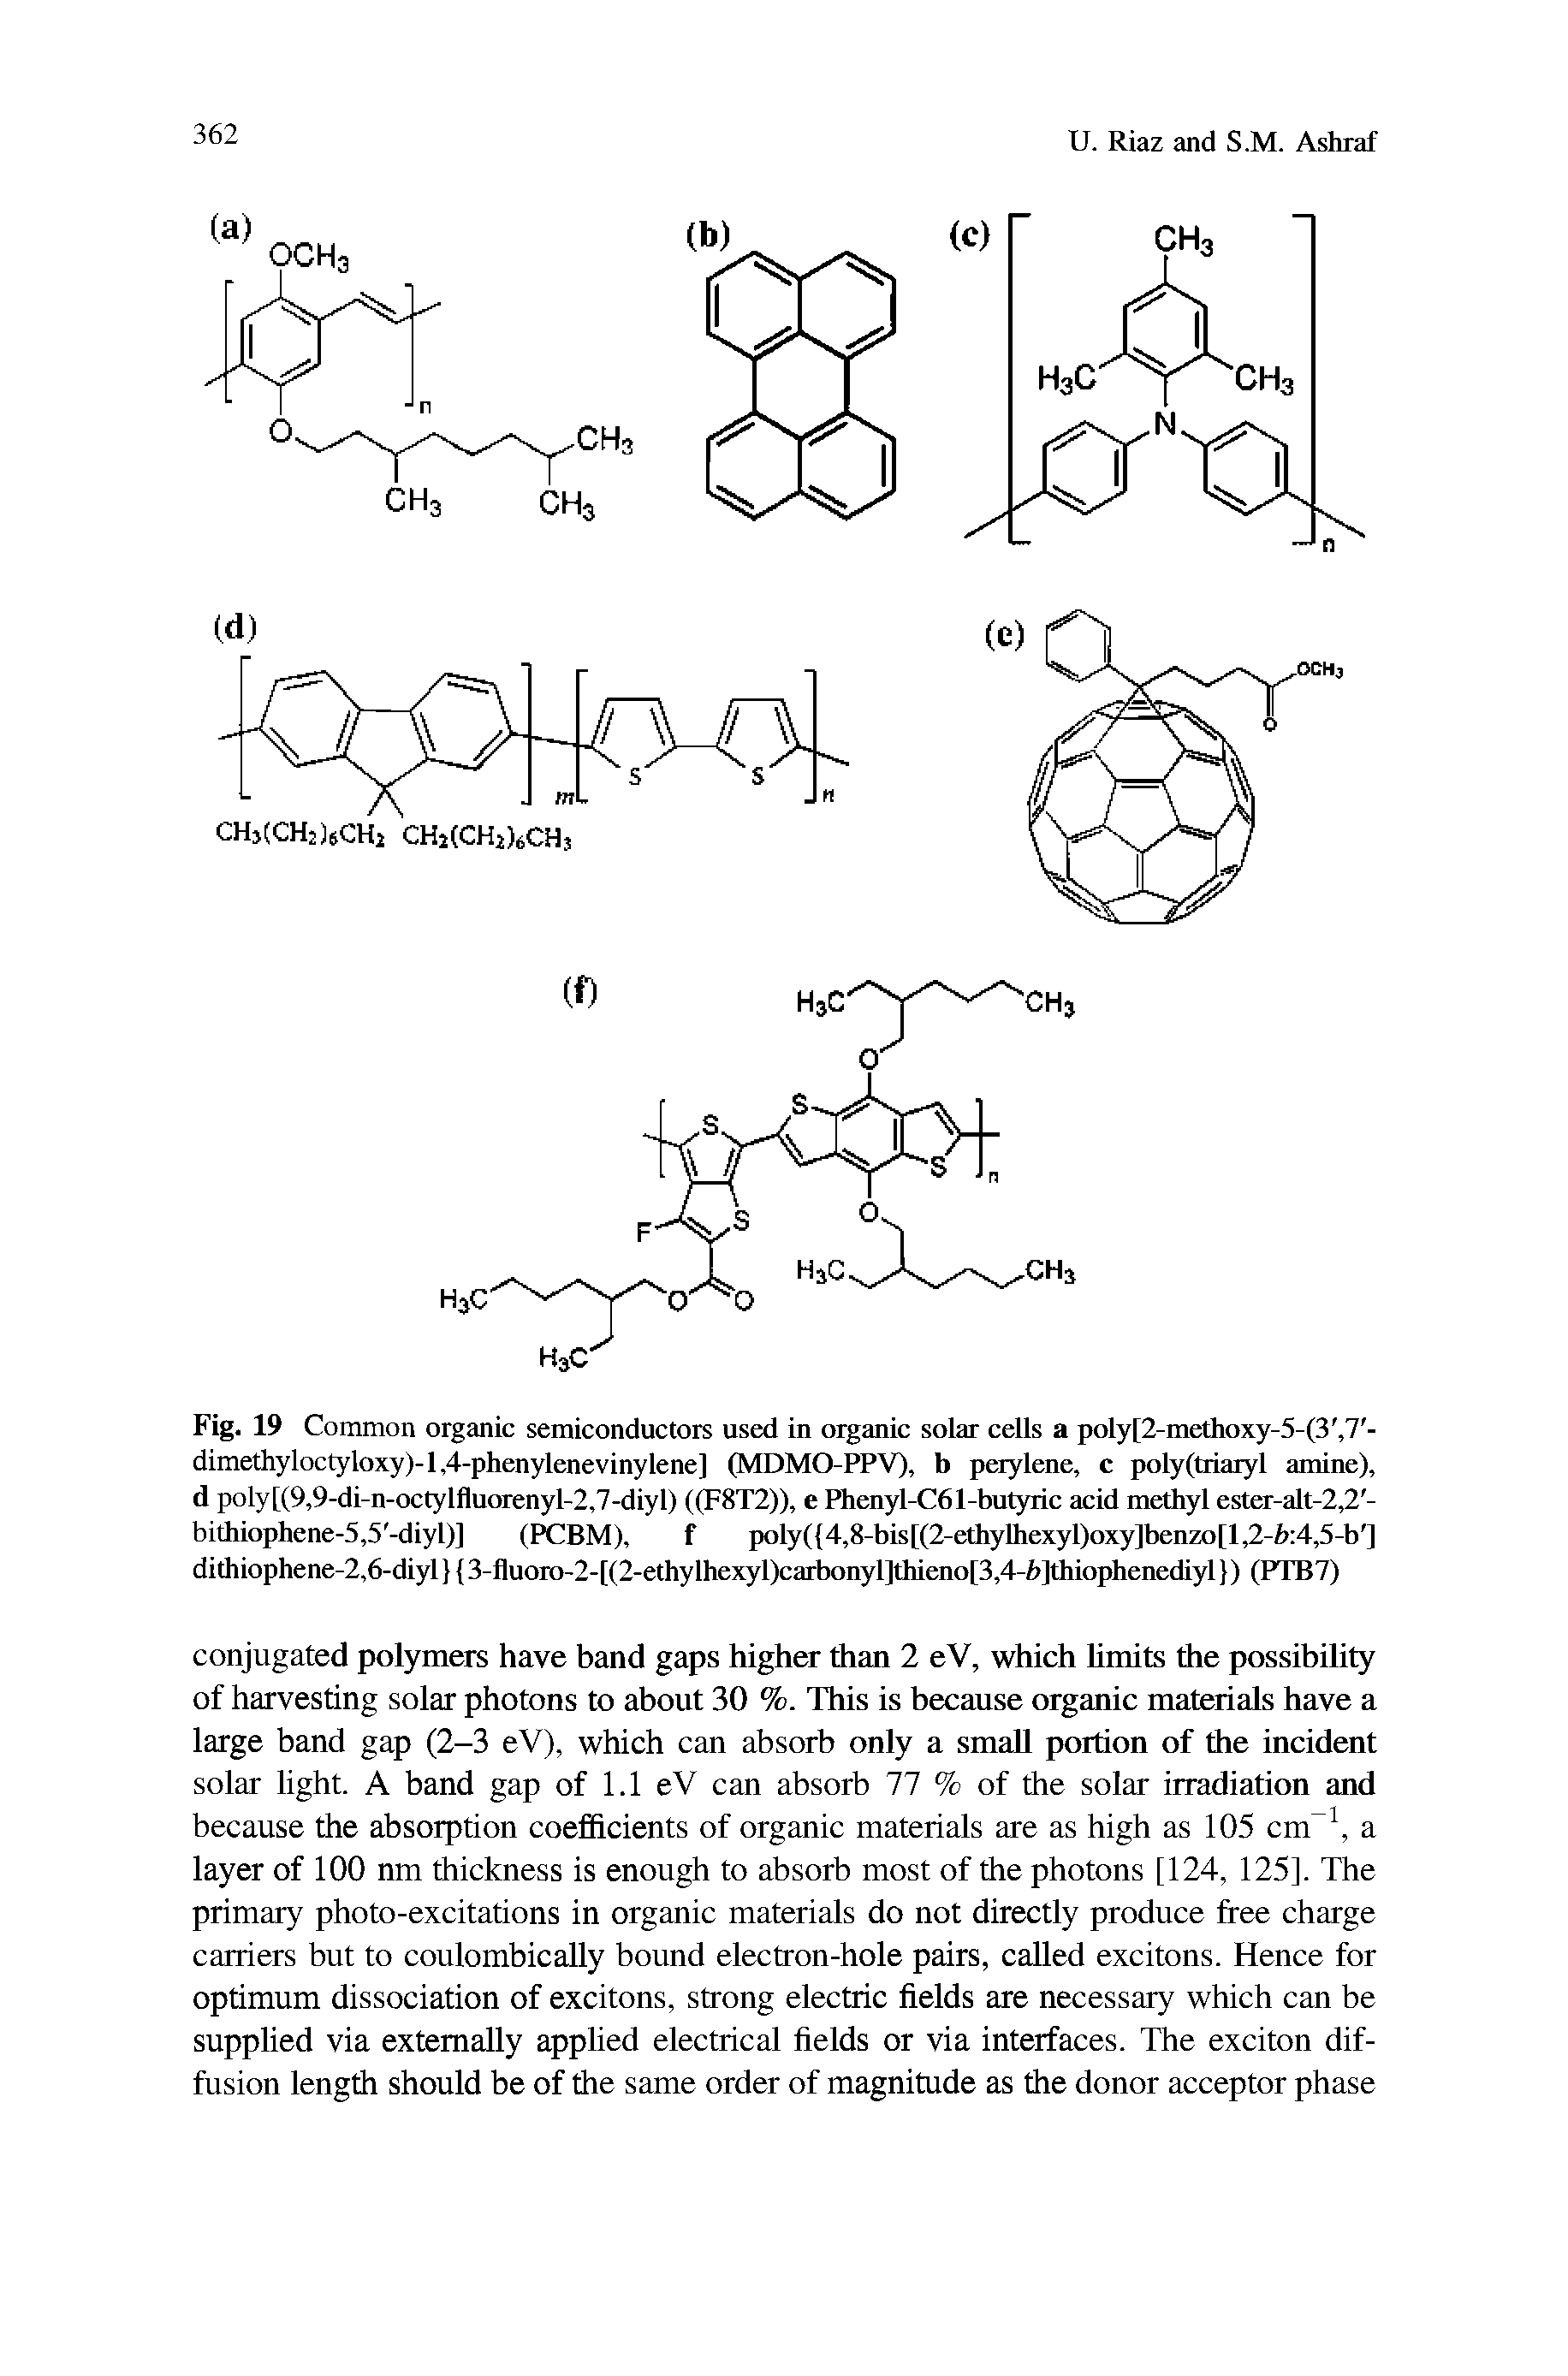 Fig. 19 Common organic semiconductors used in organic solar cells a poly[2-methoxy-5-(3, 7 -dimethyloctyloxy)-l,4-phenylenevinylene] (MDMO-PPV), b perylene, c poly(triaryl amine), d poly[(9,9-di-n-octylfluorenyl-2,7-diyl) ((F8T2)), e Phenyl-C61-butyric acid methyl ester-alt-2,2 -bithiophene-5,5 -diyl)] (PCBM), f poly( 4,8-bis[(2-ethylhexyl)oxy]benzo[l,2-h 4,5-b ] dithiophene-2,6-diyl 3-fluoro-2-[(2-ethylhexyl)carbonyl]thieno[3,4-h]thiophenediyl ) (PTB7)...